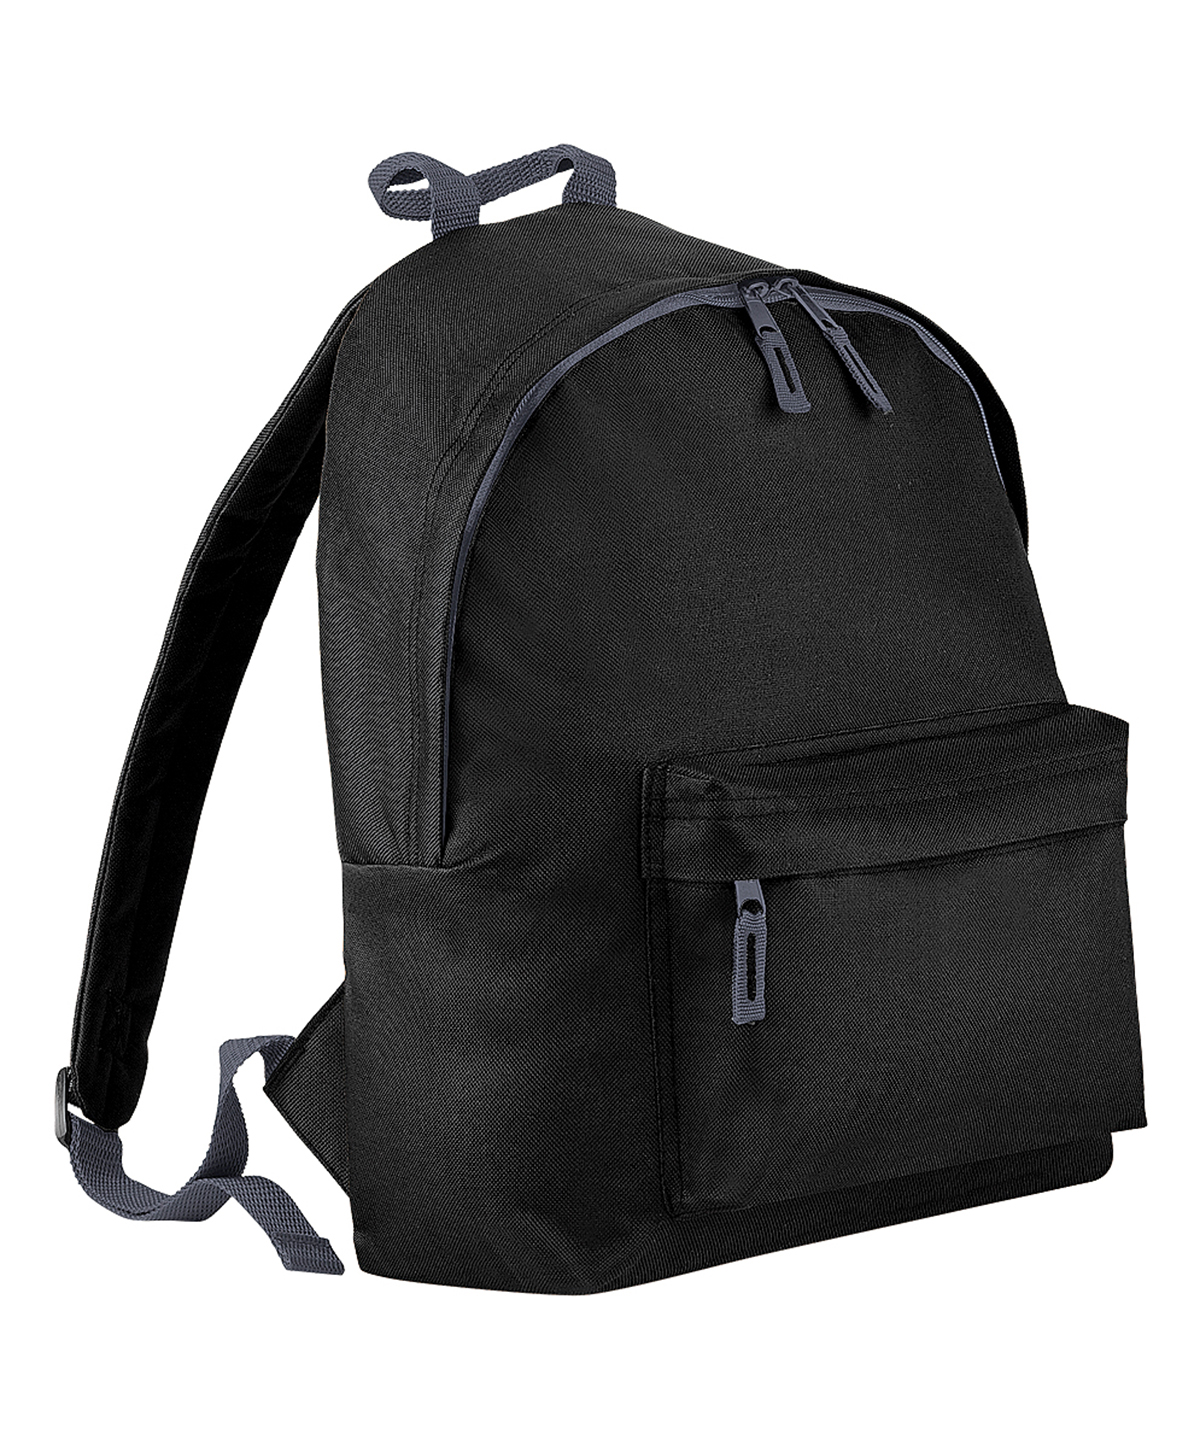 Junior Fashion Backpack Black Size One Size